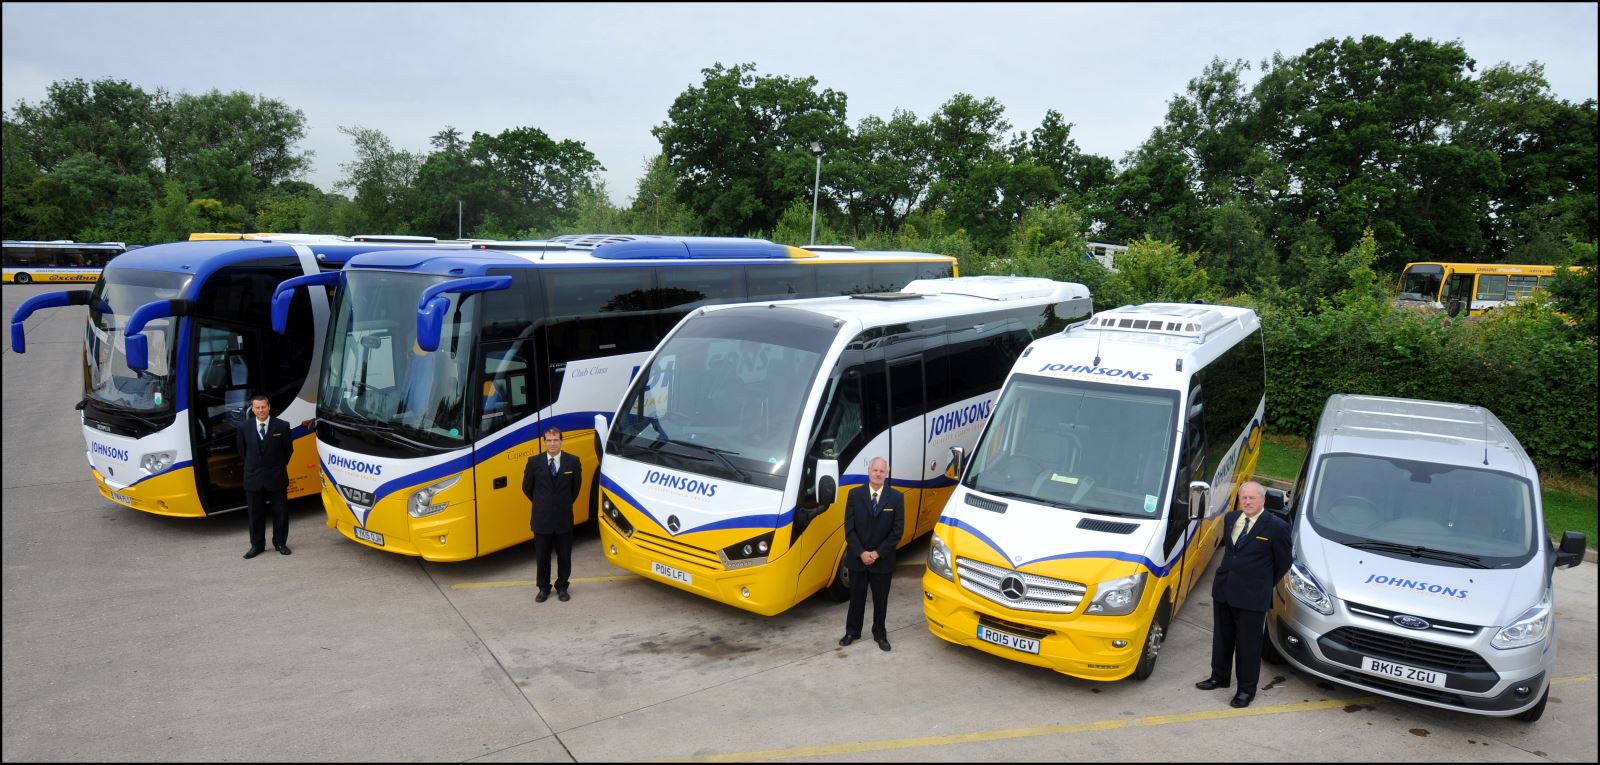 Large Fleet of Coaches